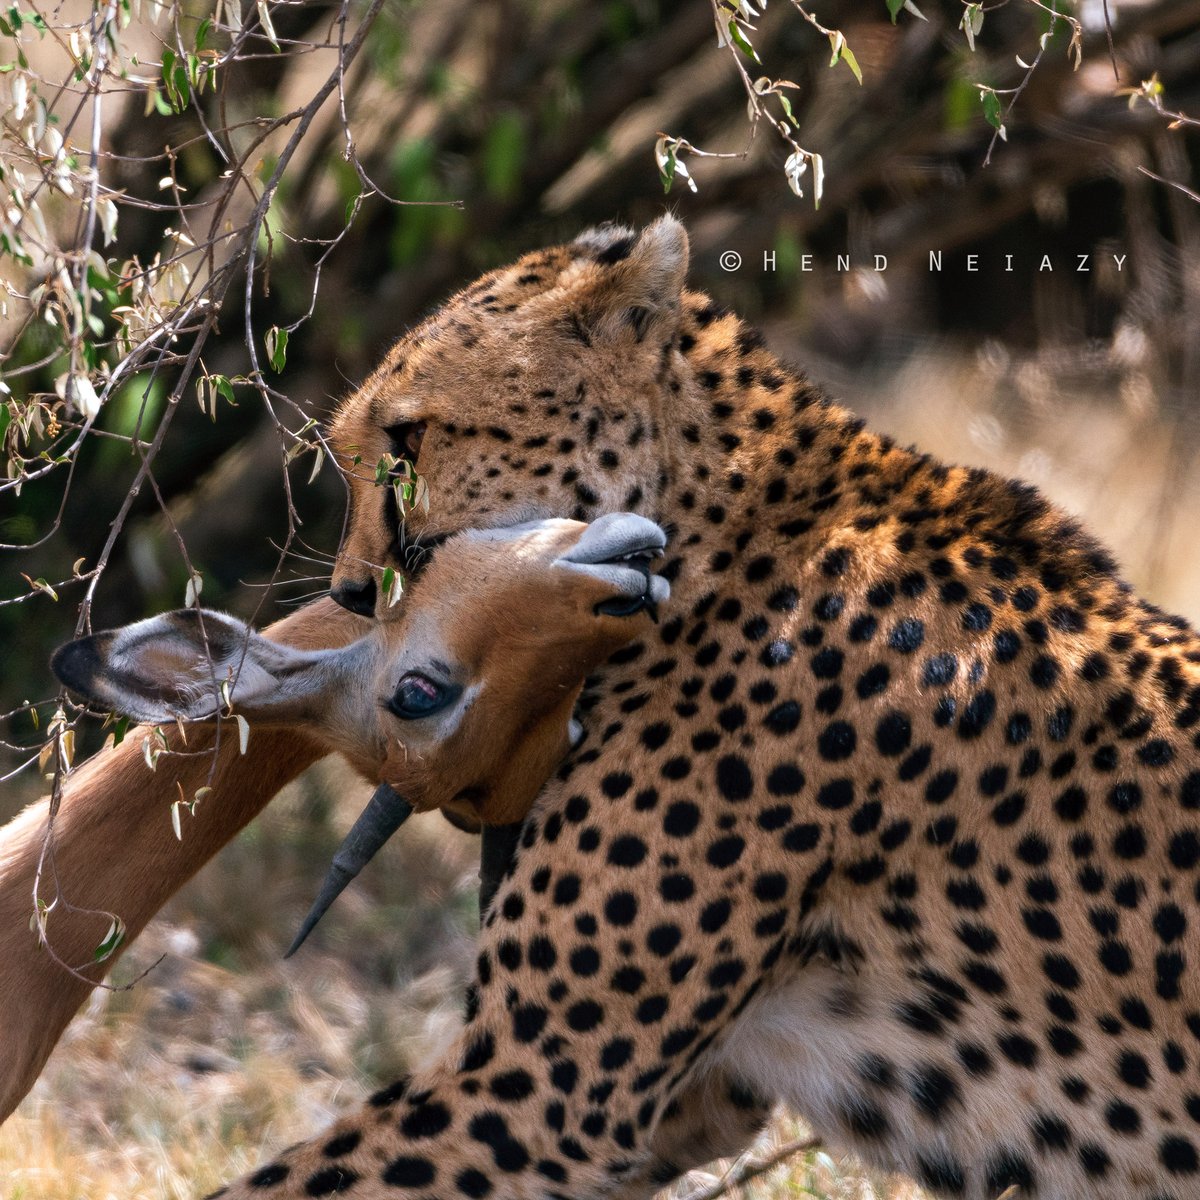 life for life
masai mara national reserve - kenya 

#cheetah #natgeomagarab #wildlifephotography #wildplanetphotomag #nikonmea #nikonkenya #masaimara